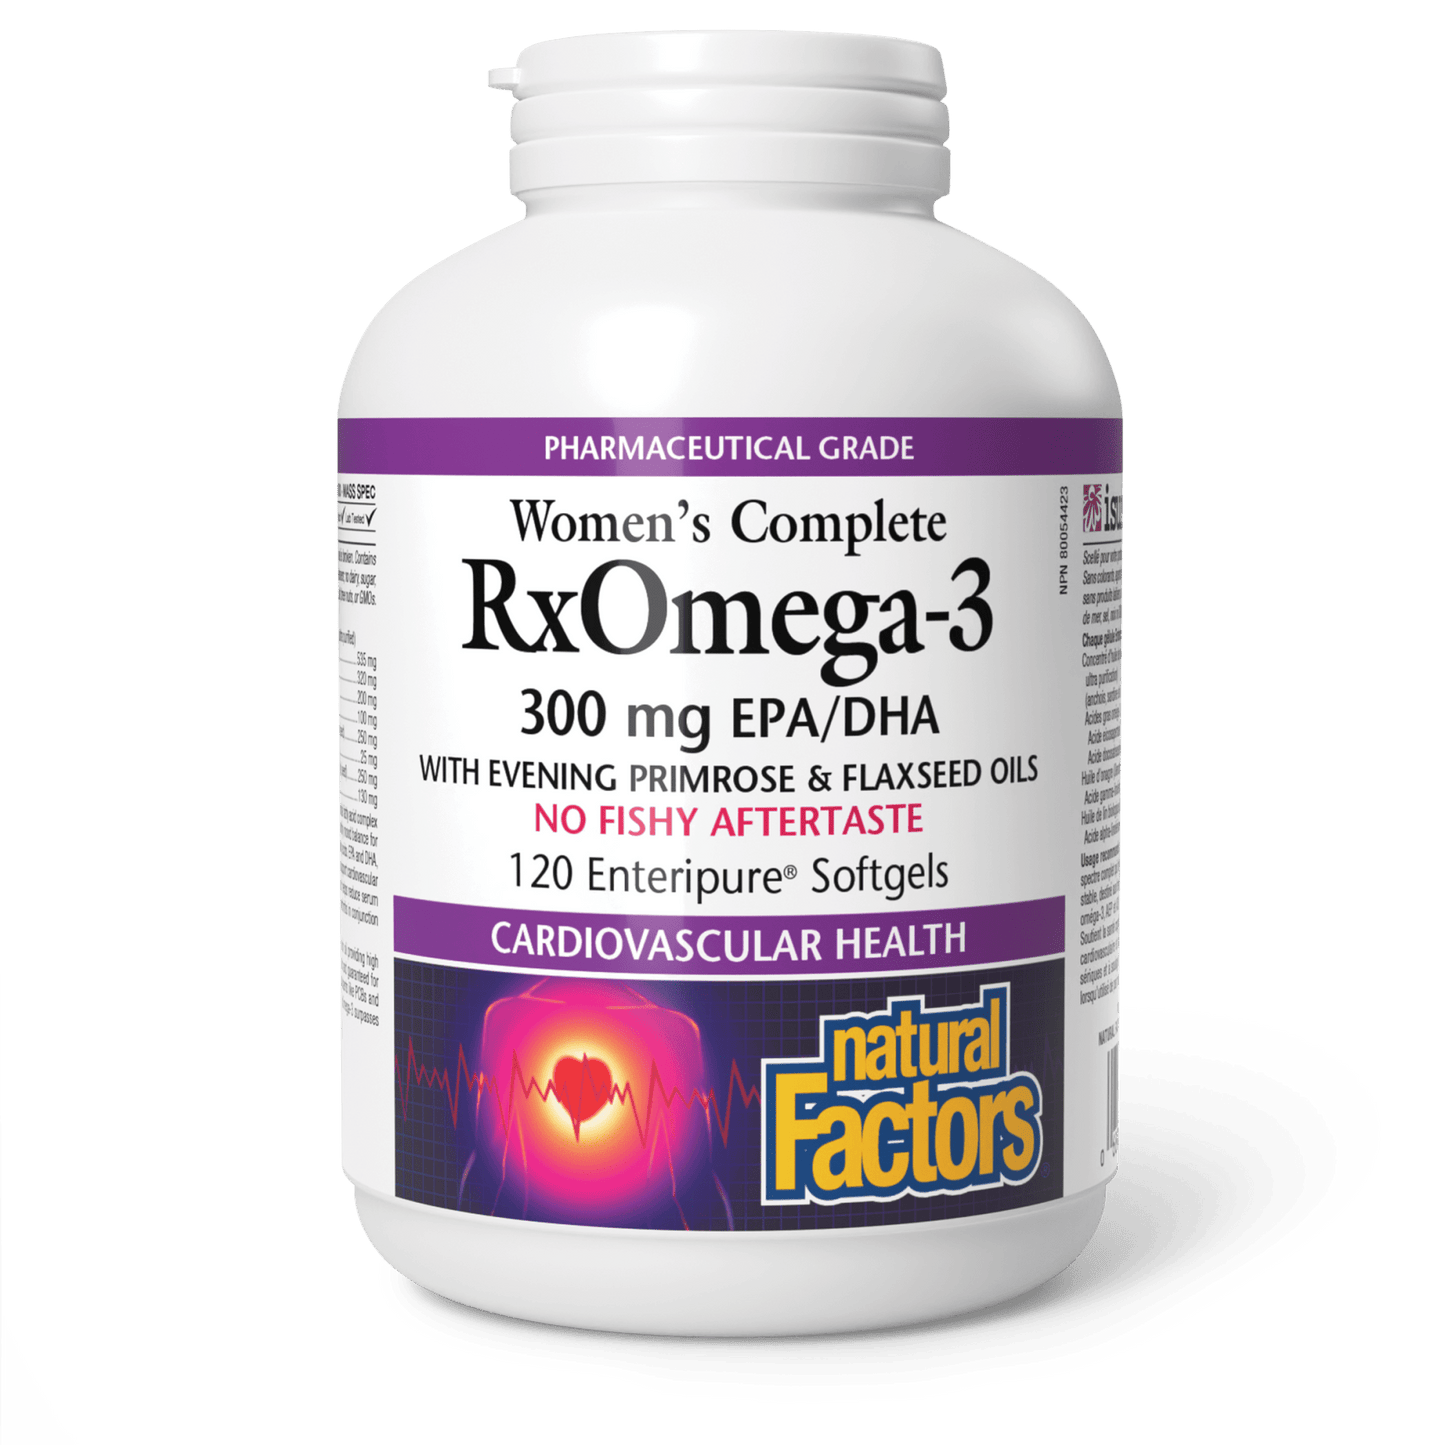 Women’s Complete RxOmega-3 300 mg EPA/DHA, Natural Factors|v|image|3577